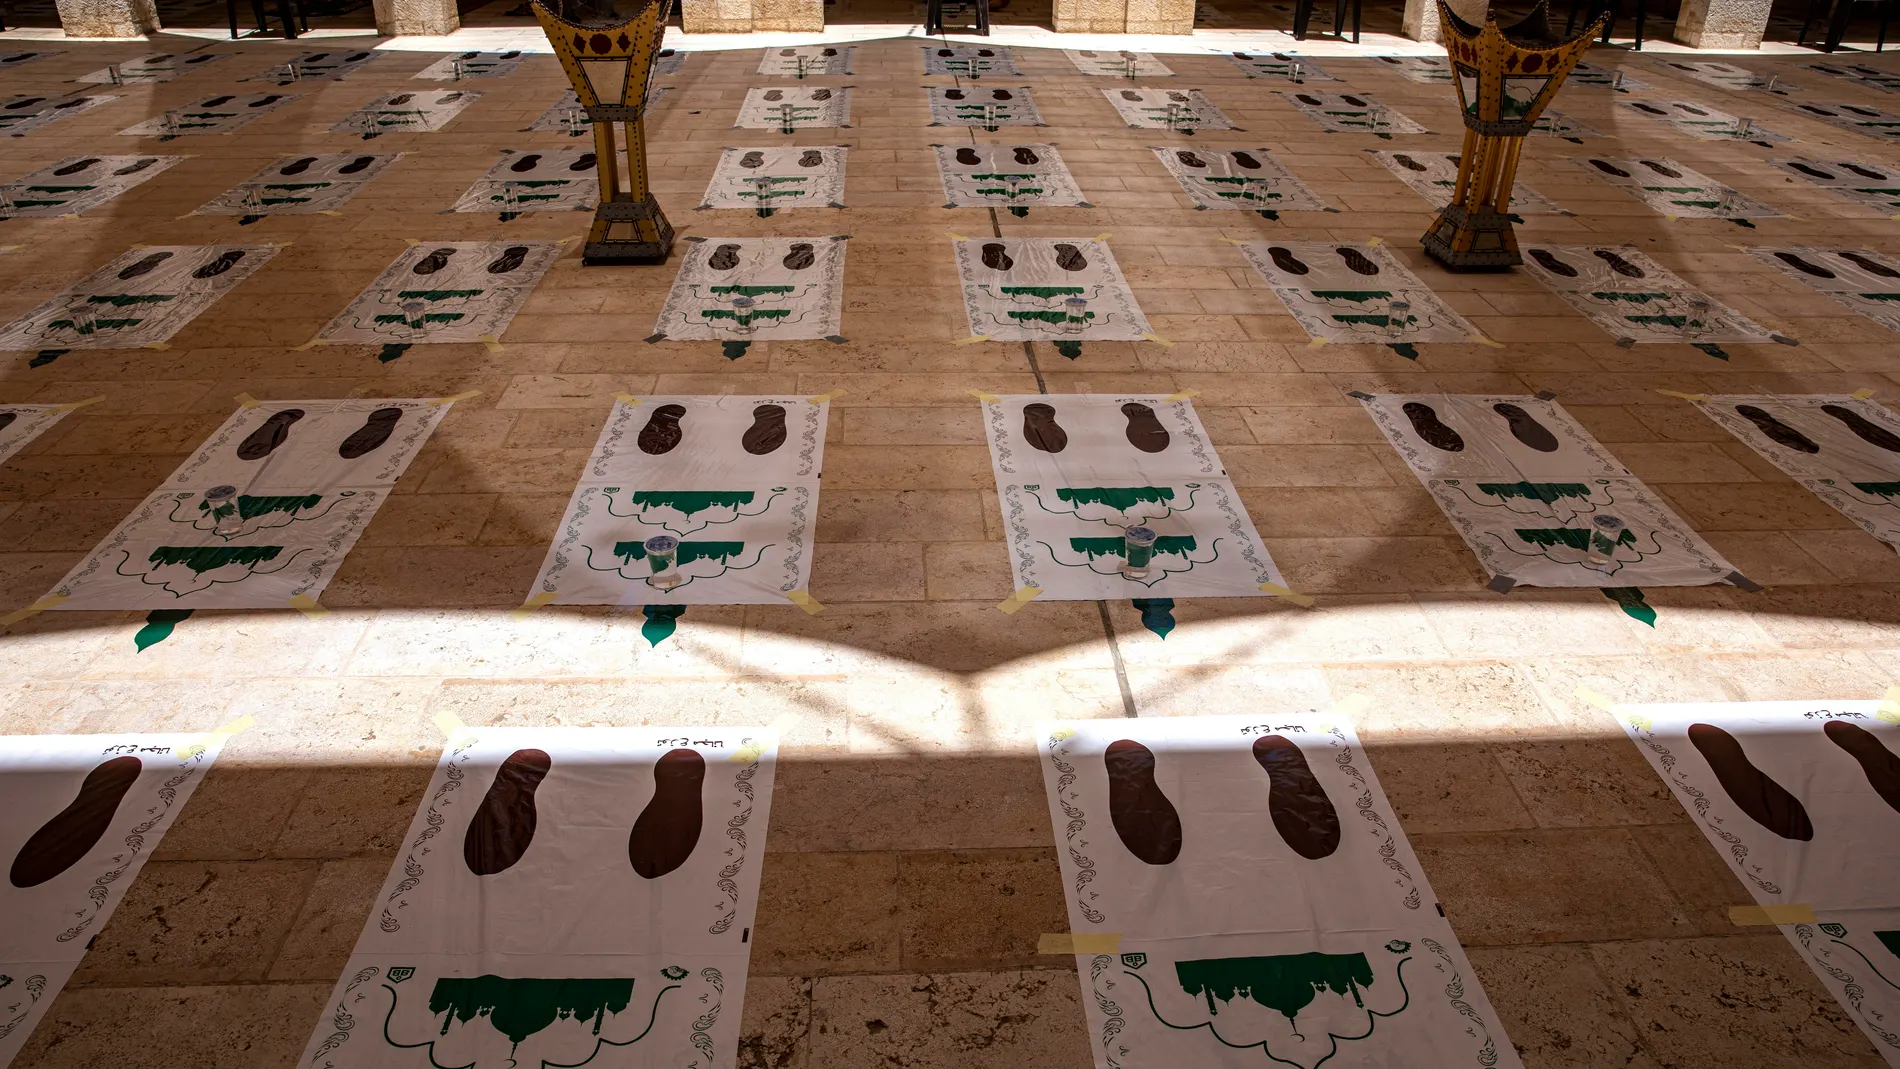 Jordanians return to mosque prayers